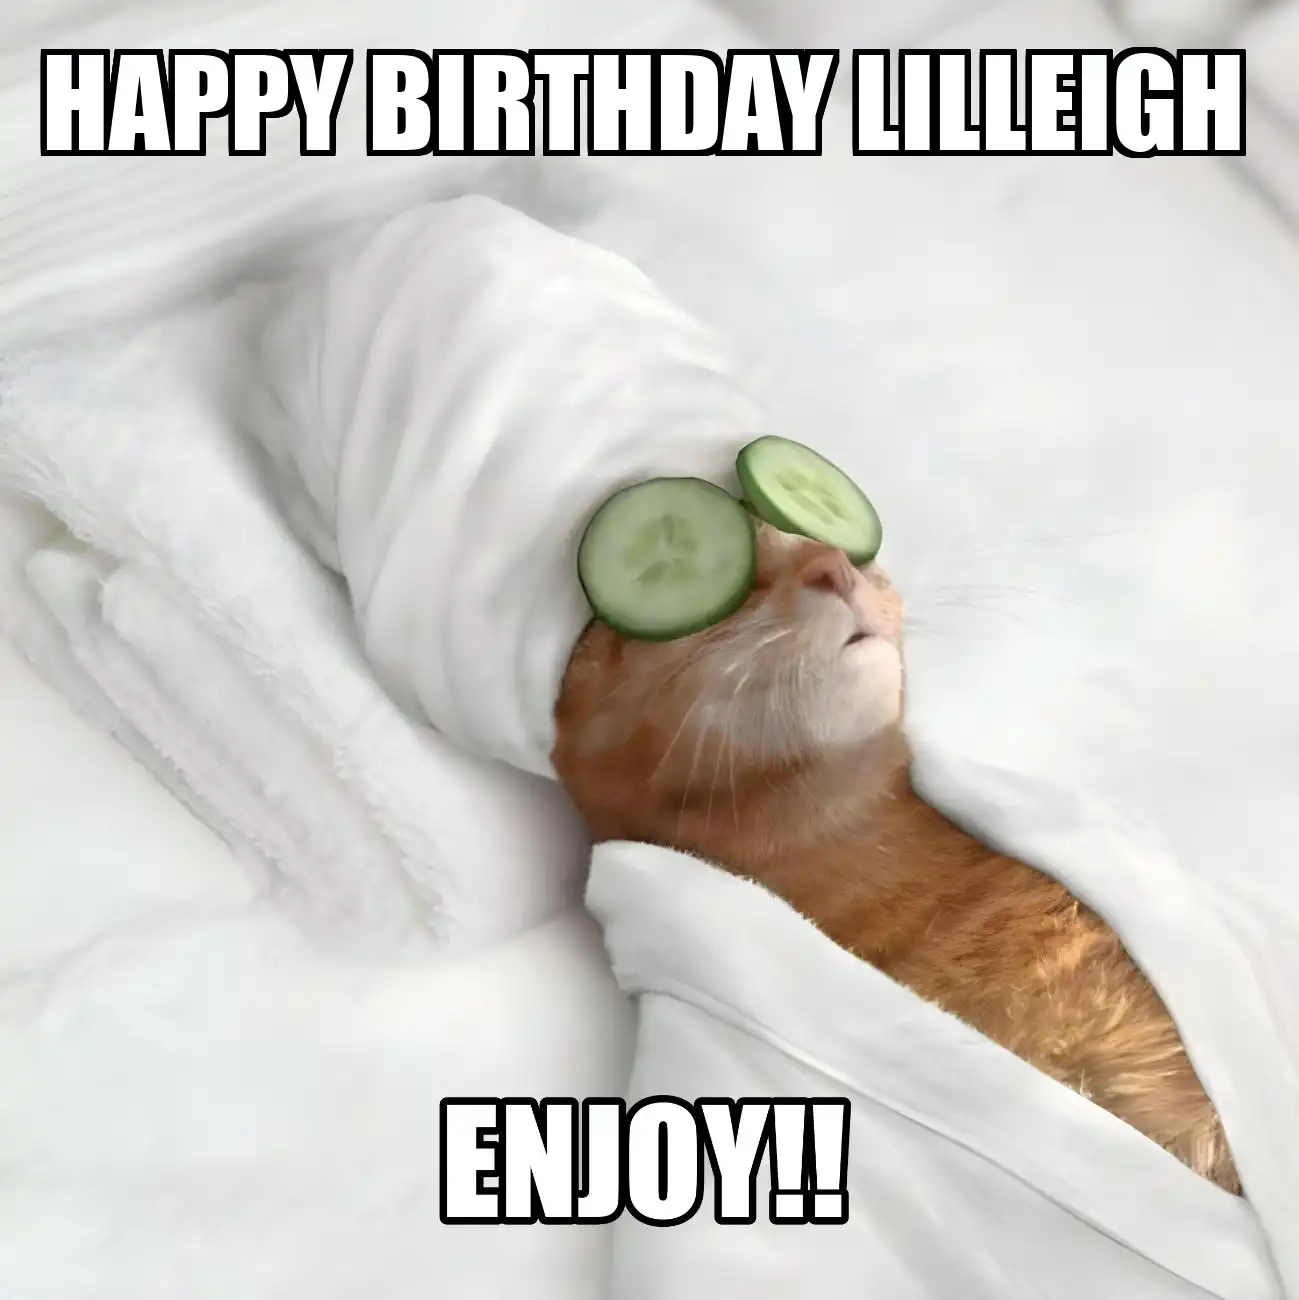 Happy Birthday Lilleigh Enjoy Cat Meme